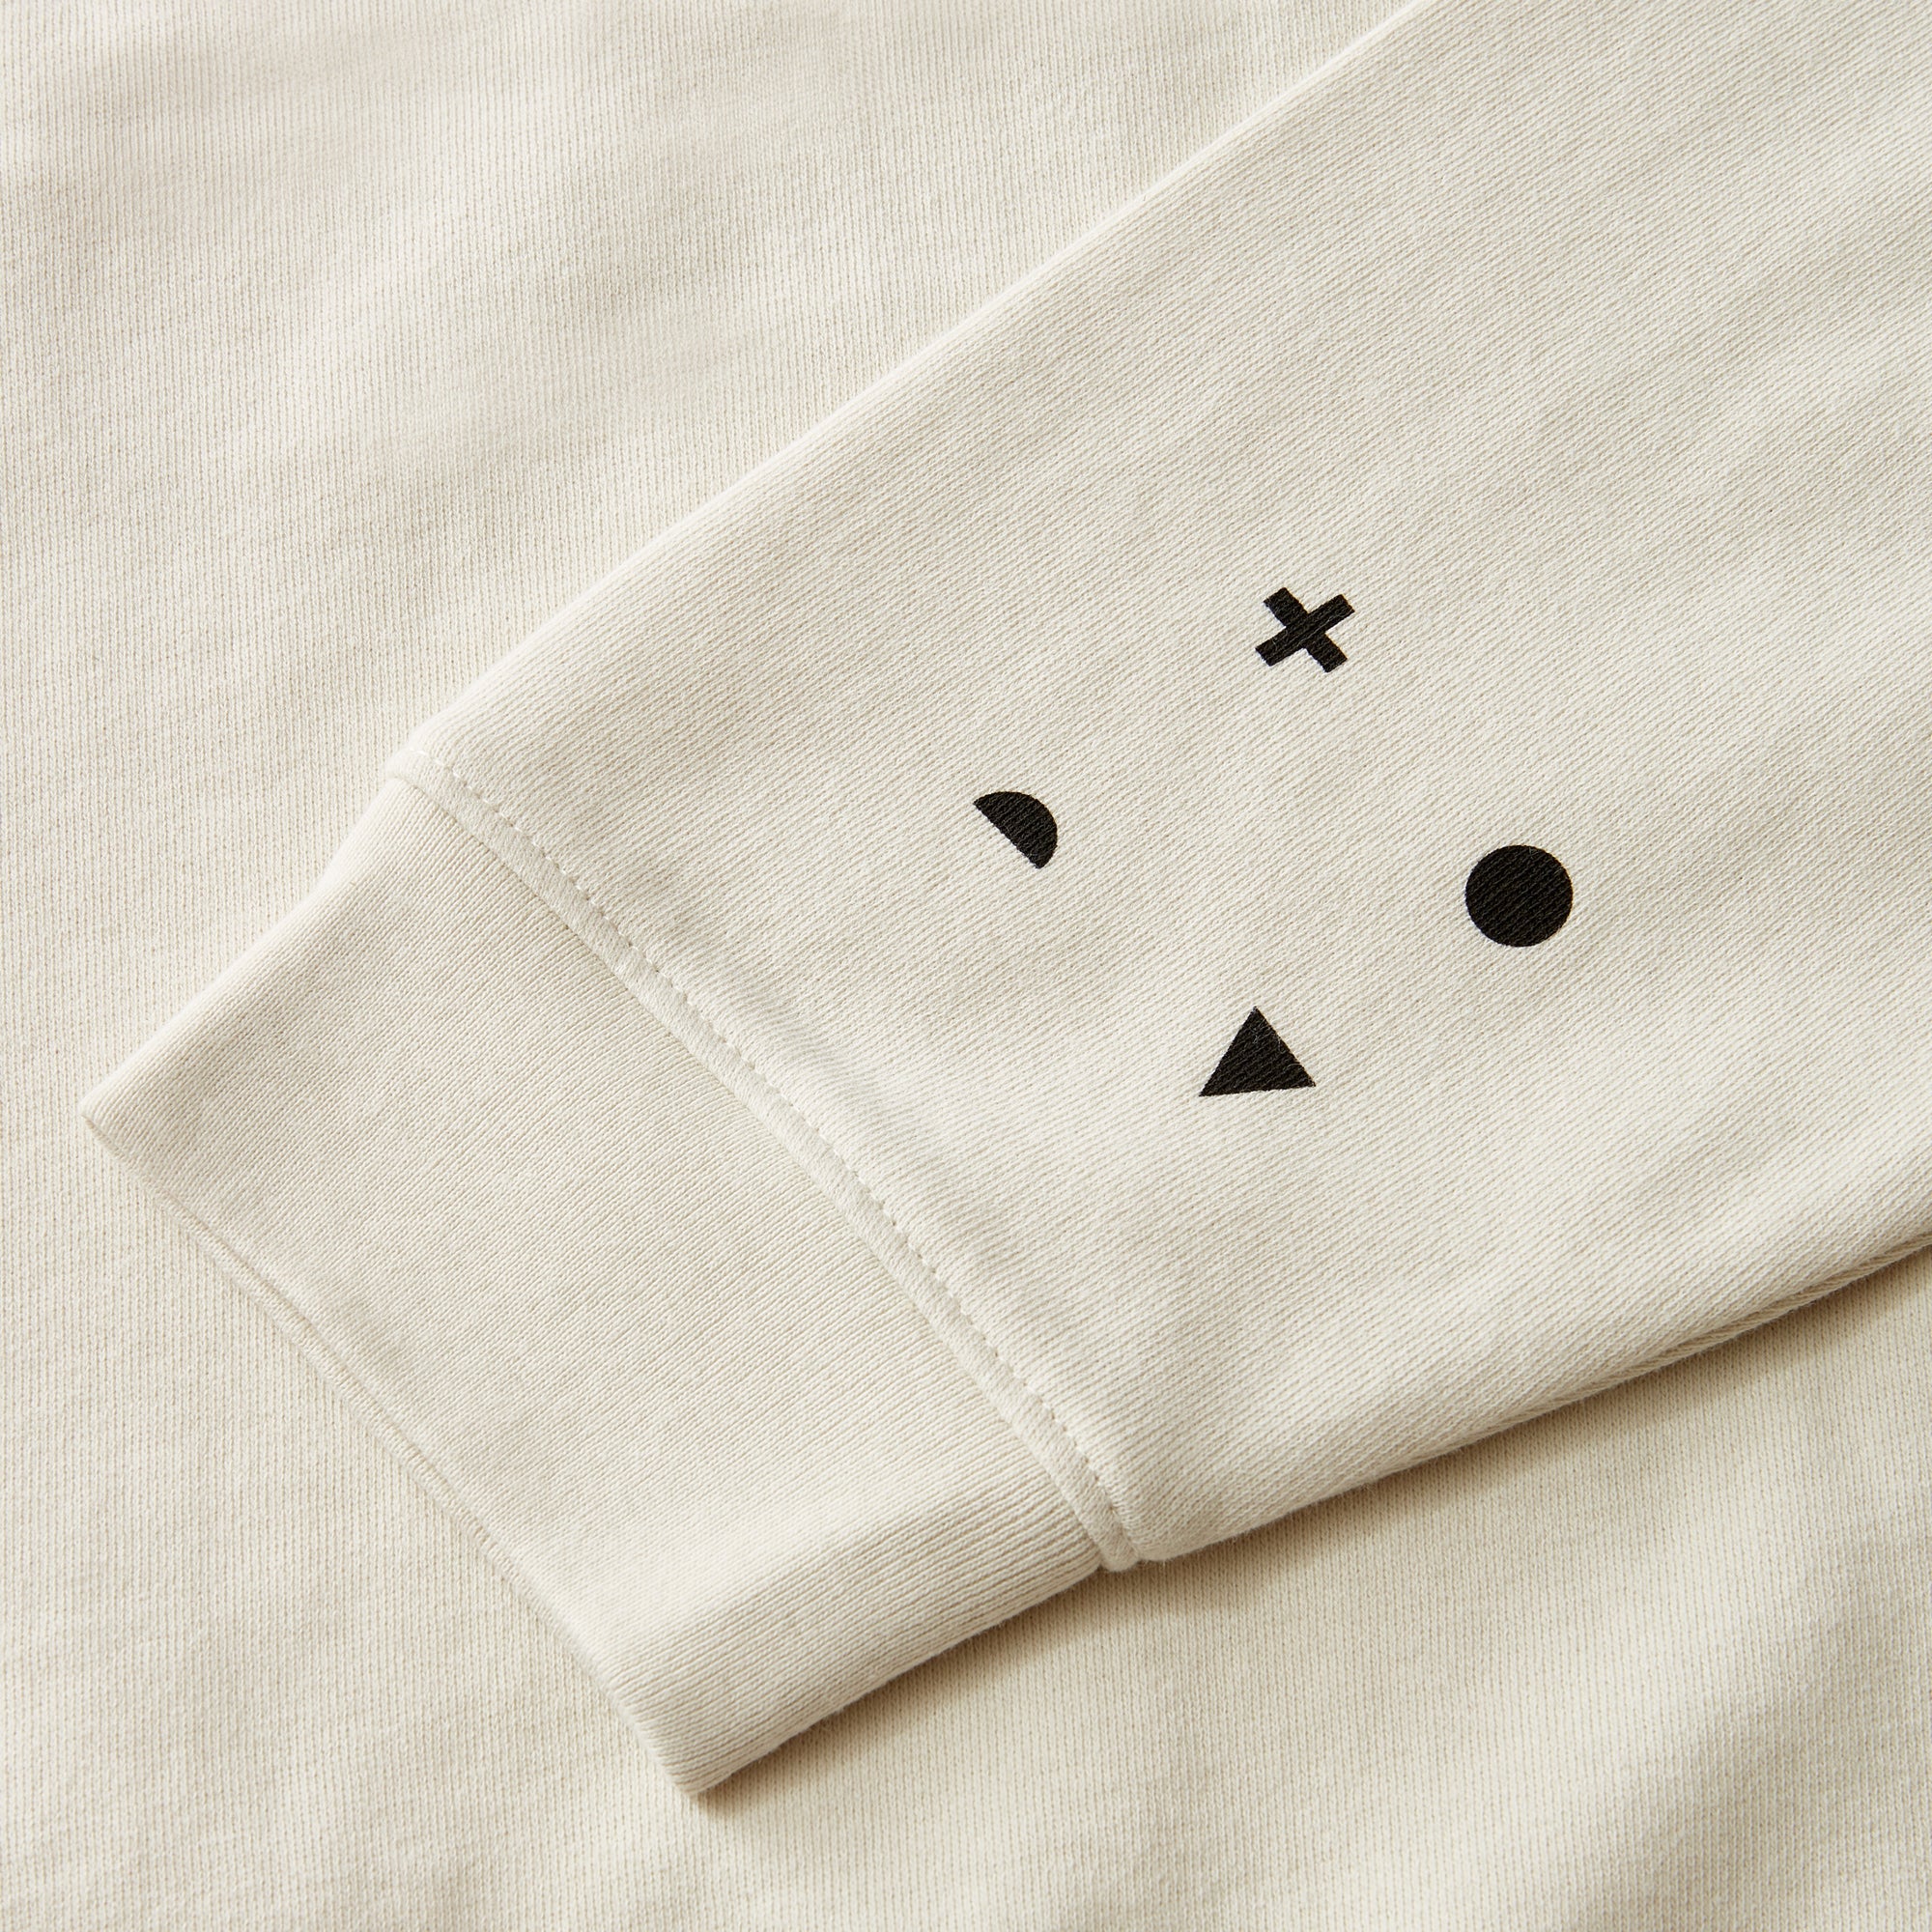 Sleeve of a Cream Sweatshirt with black icon design